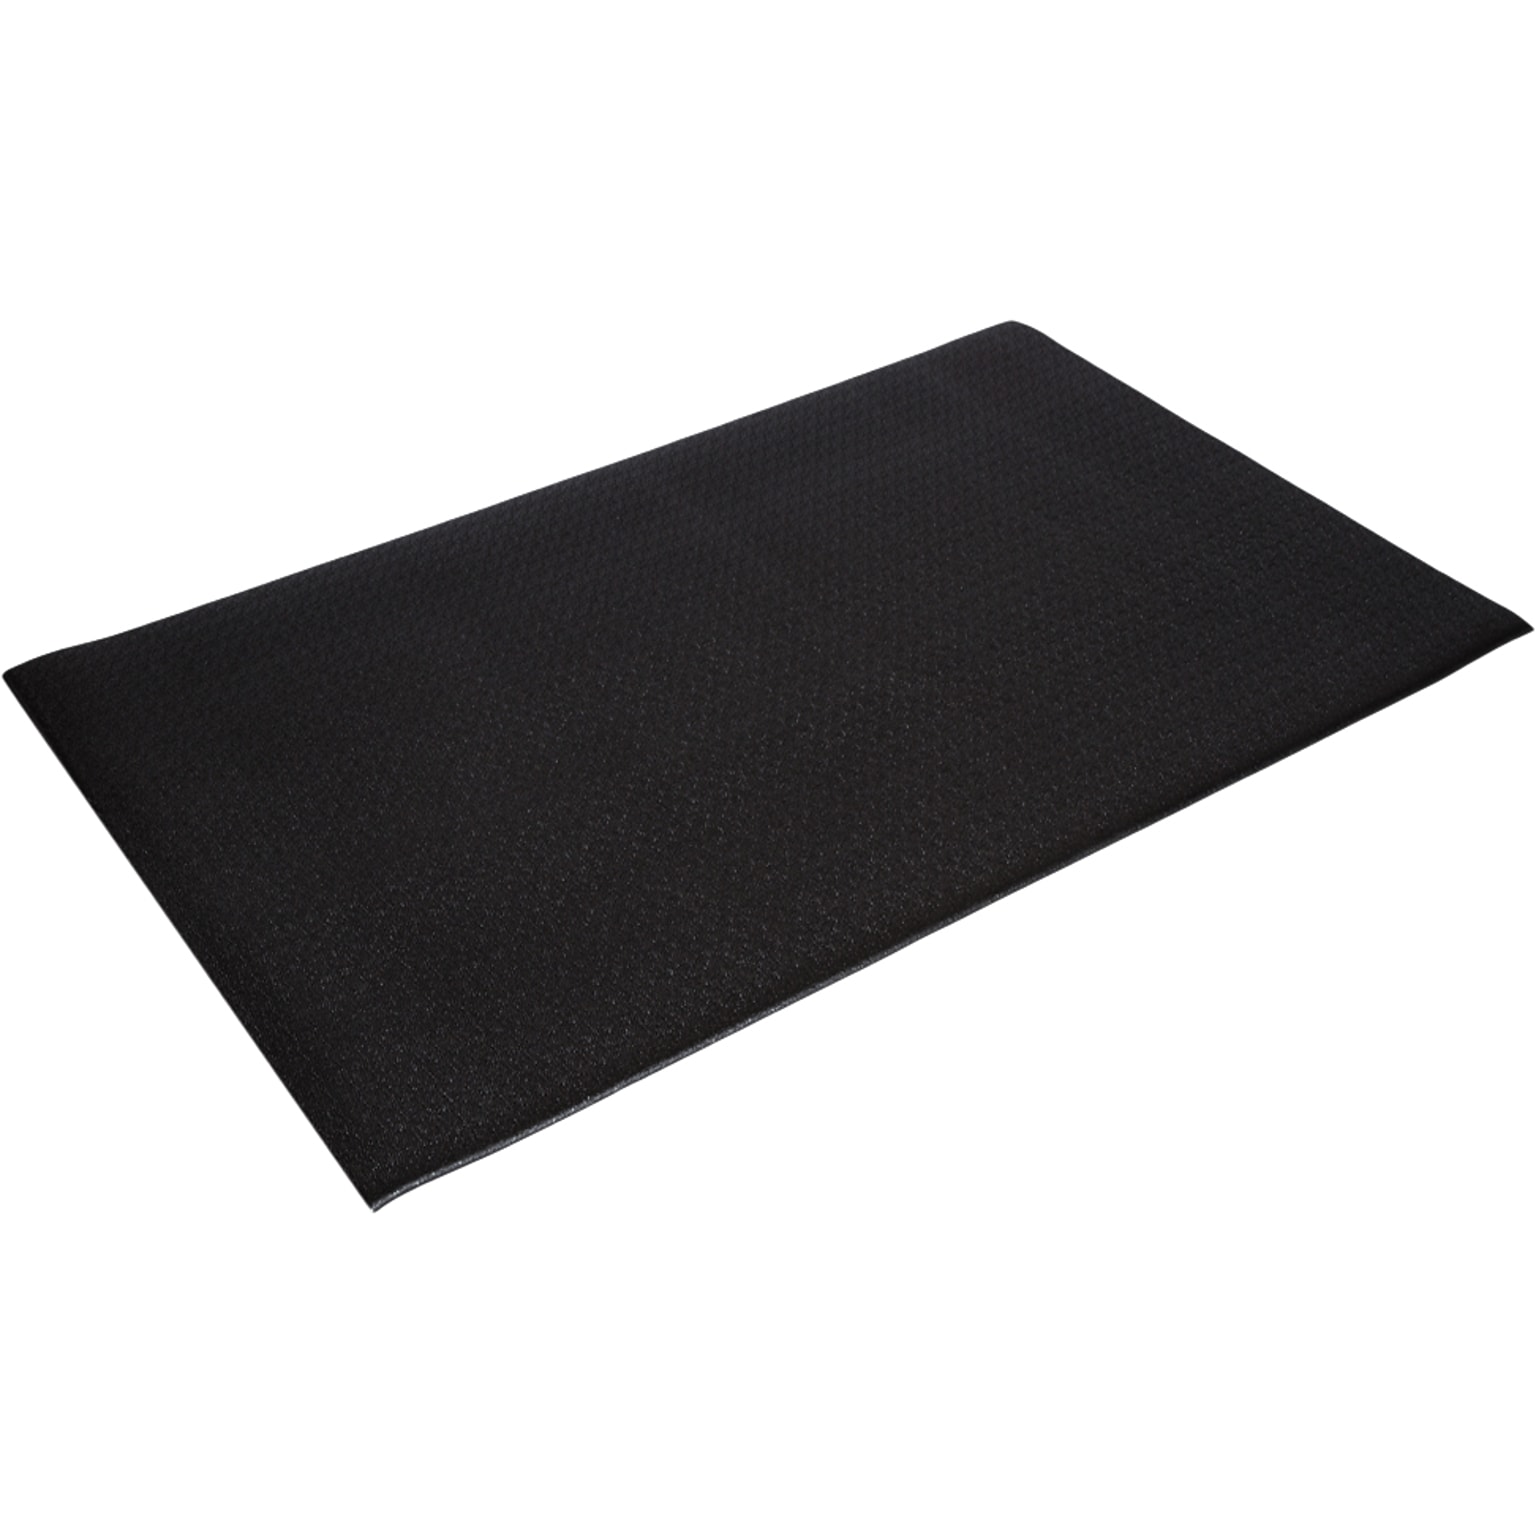 Crown Mats Comfort-King Anti-Fatigue Mat, 36 x 60, Black (CK 0035BK)